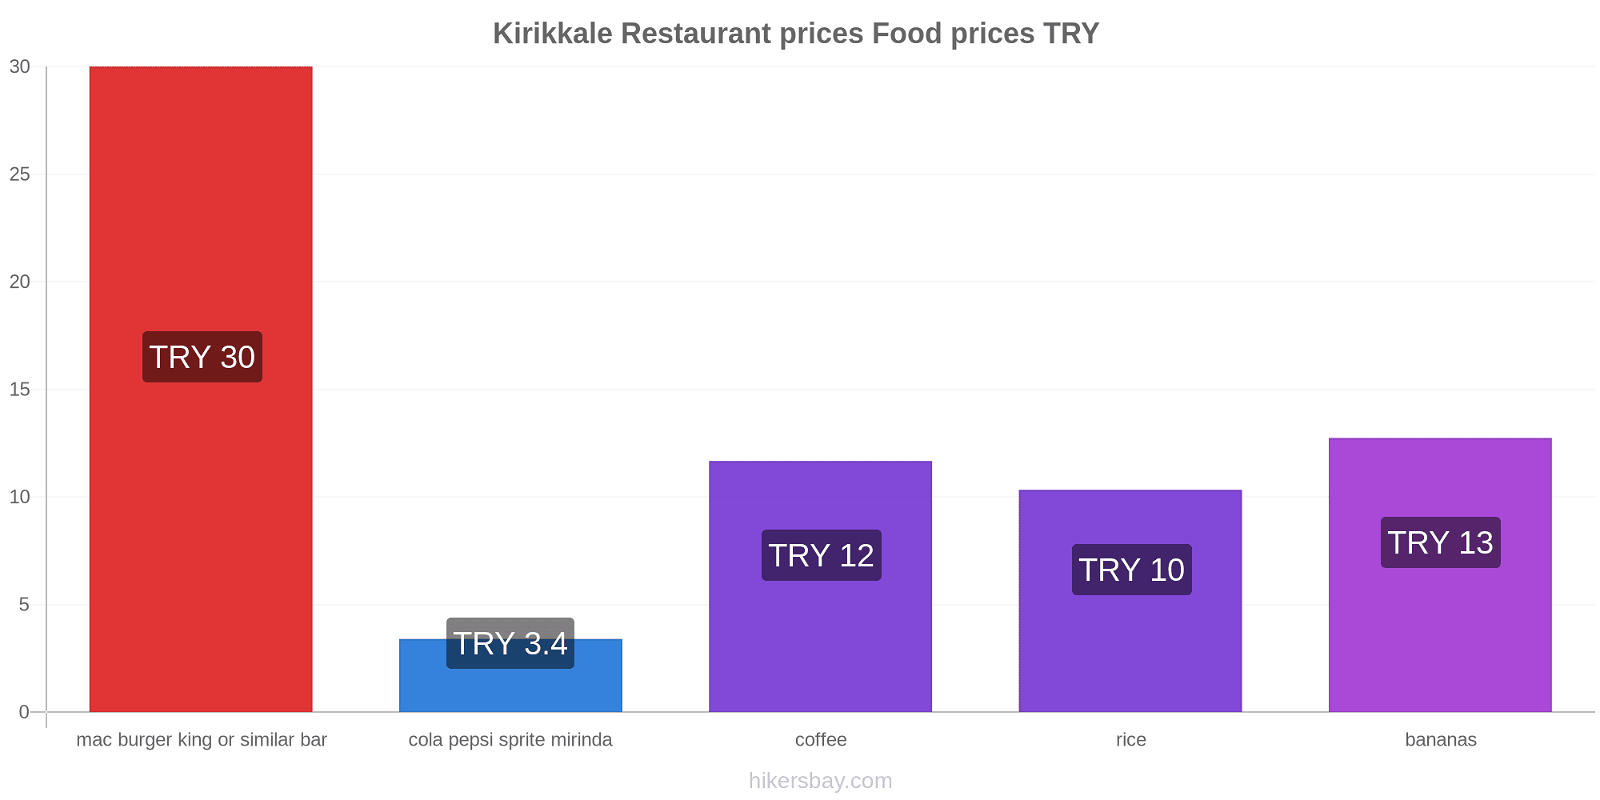 Kirikkale price changes hikersbay.com